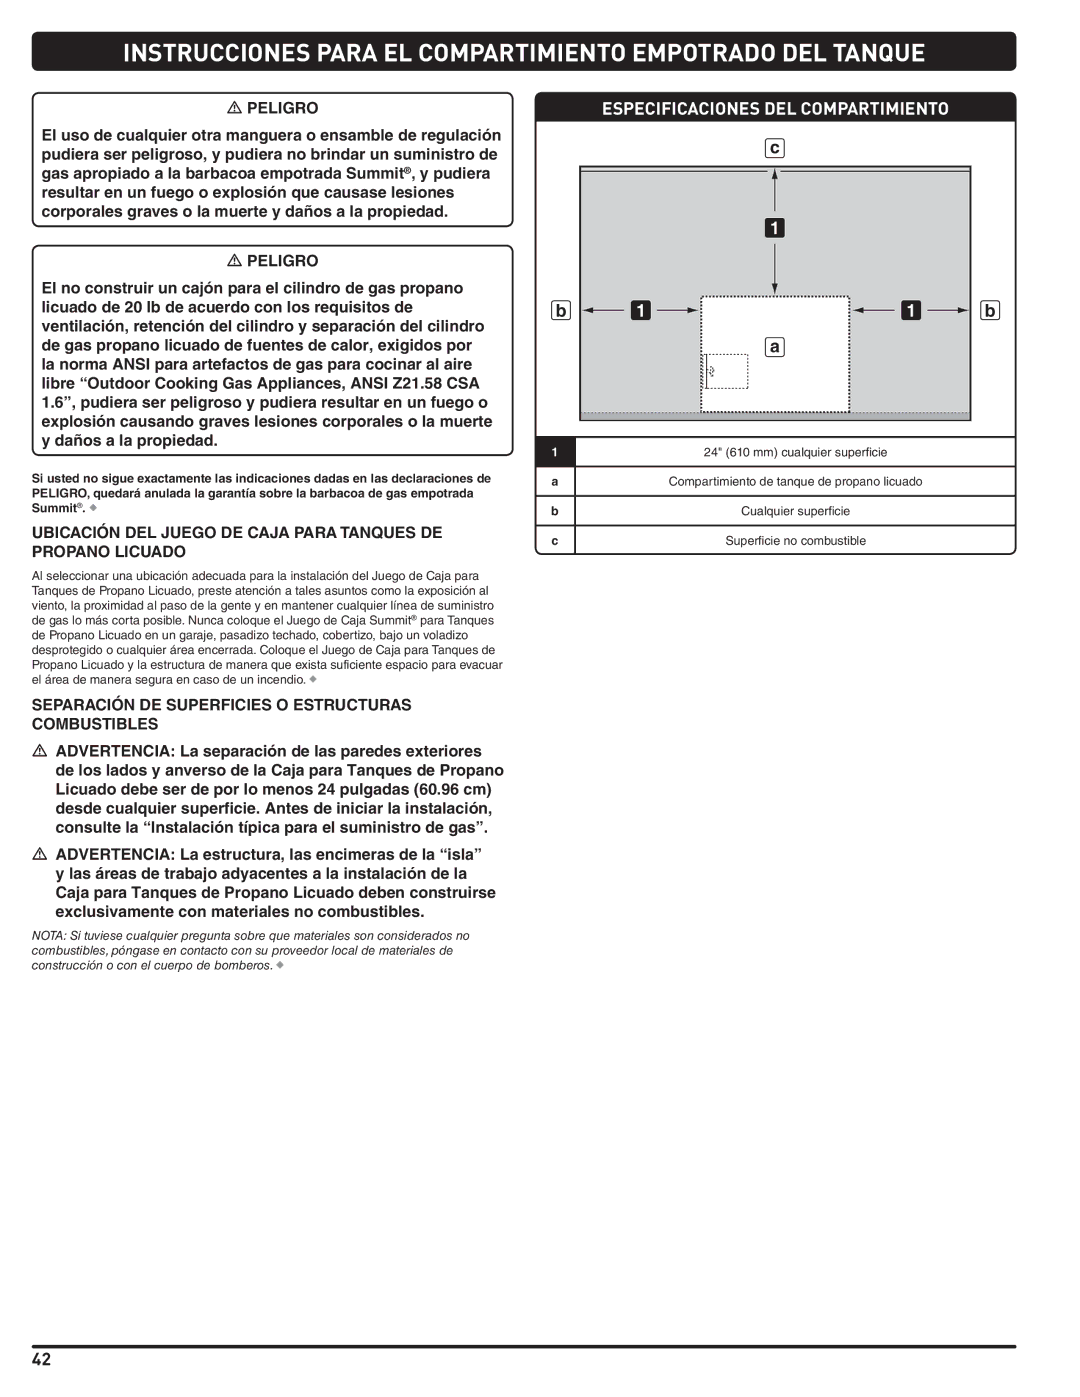 Weber Weber, 660- LP manual Ubicación DEL Juego DE Caja Para Tanques DE Propano Licuado 